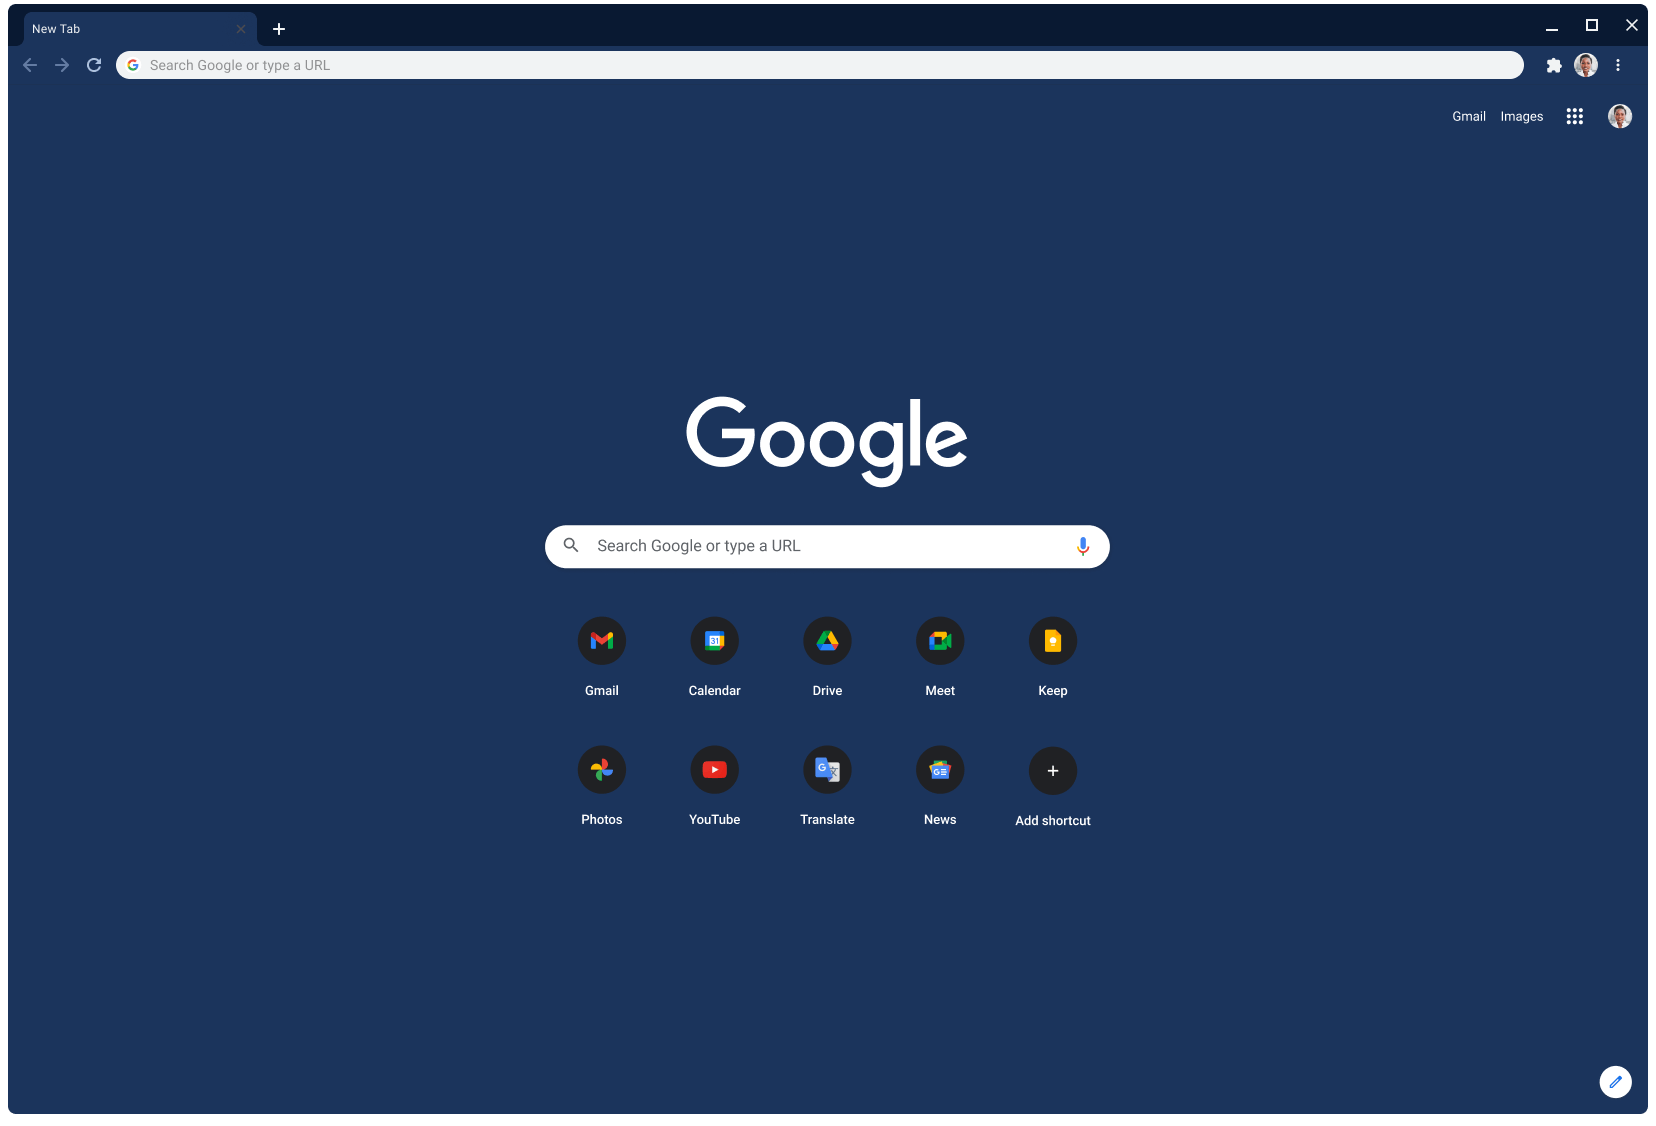 Chrome browser window displaying Google.com, using the Slate theme.